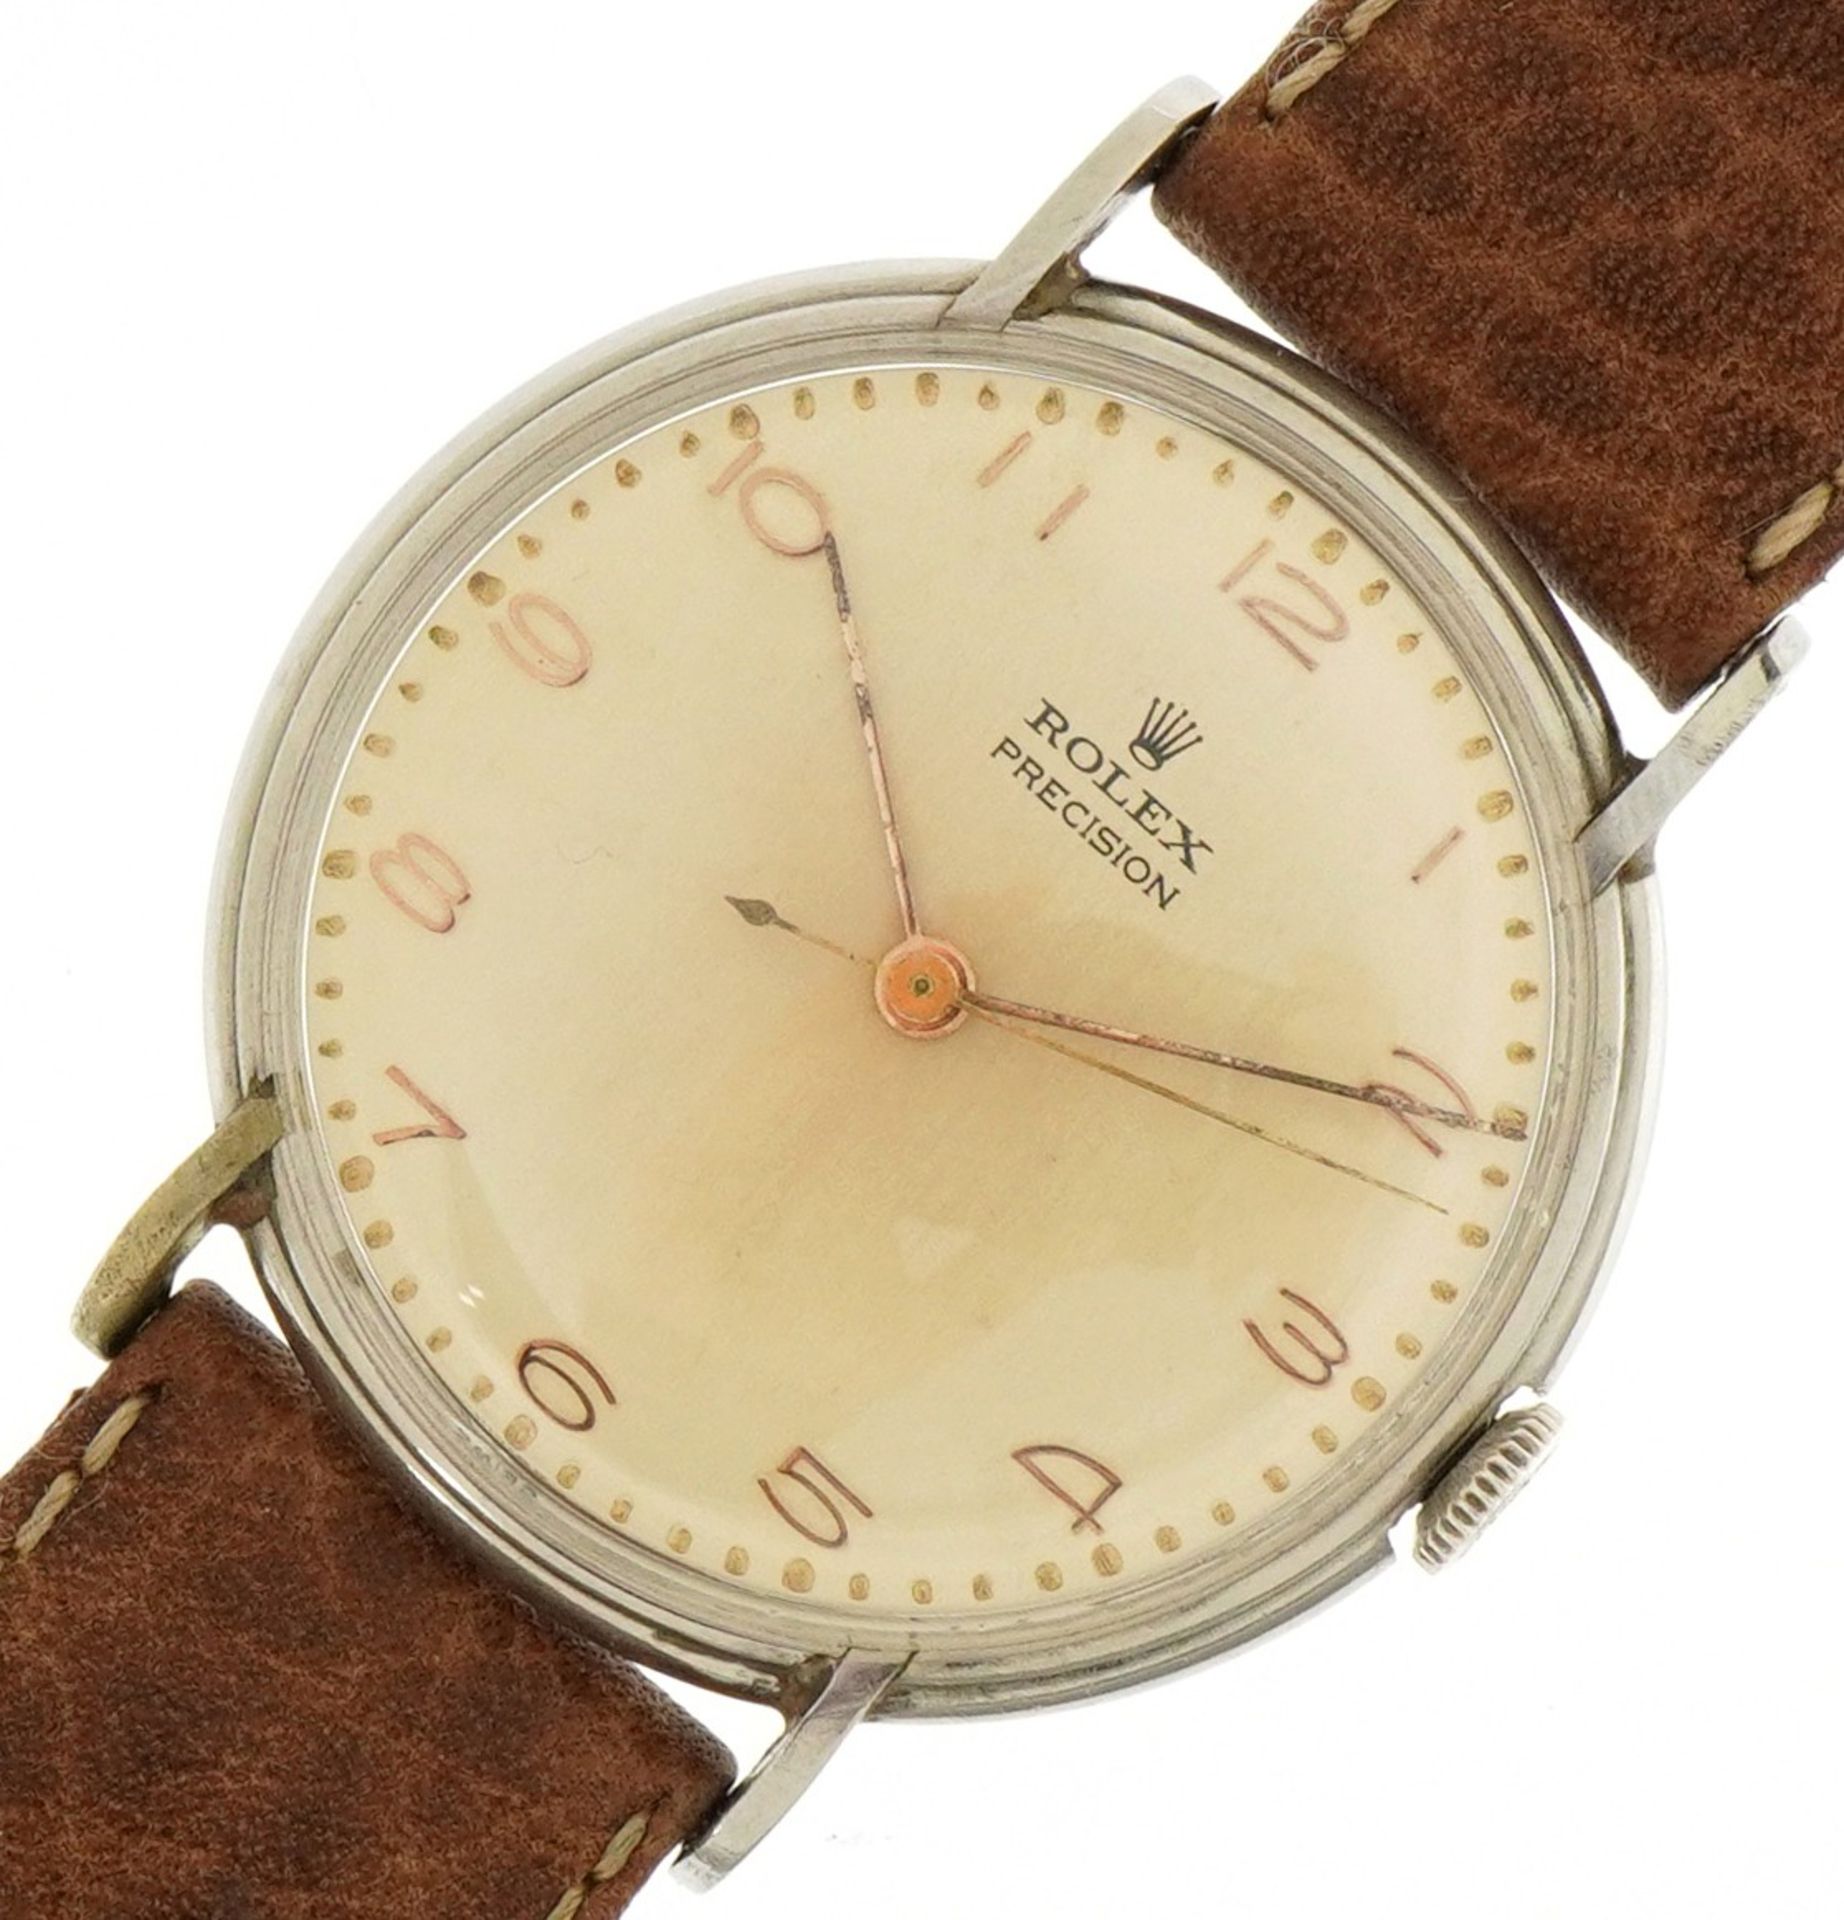 Rolex, gentlemen's Rolex Precision wristwatch, the case numbered 274865, 35mm in diameter